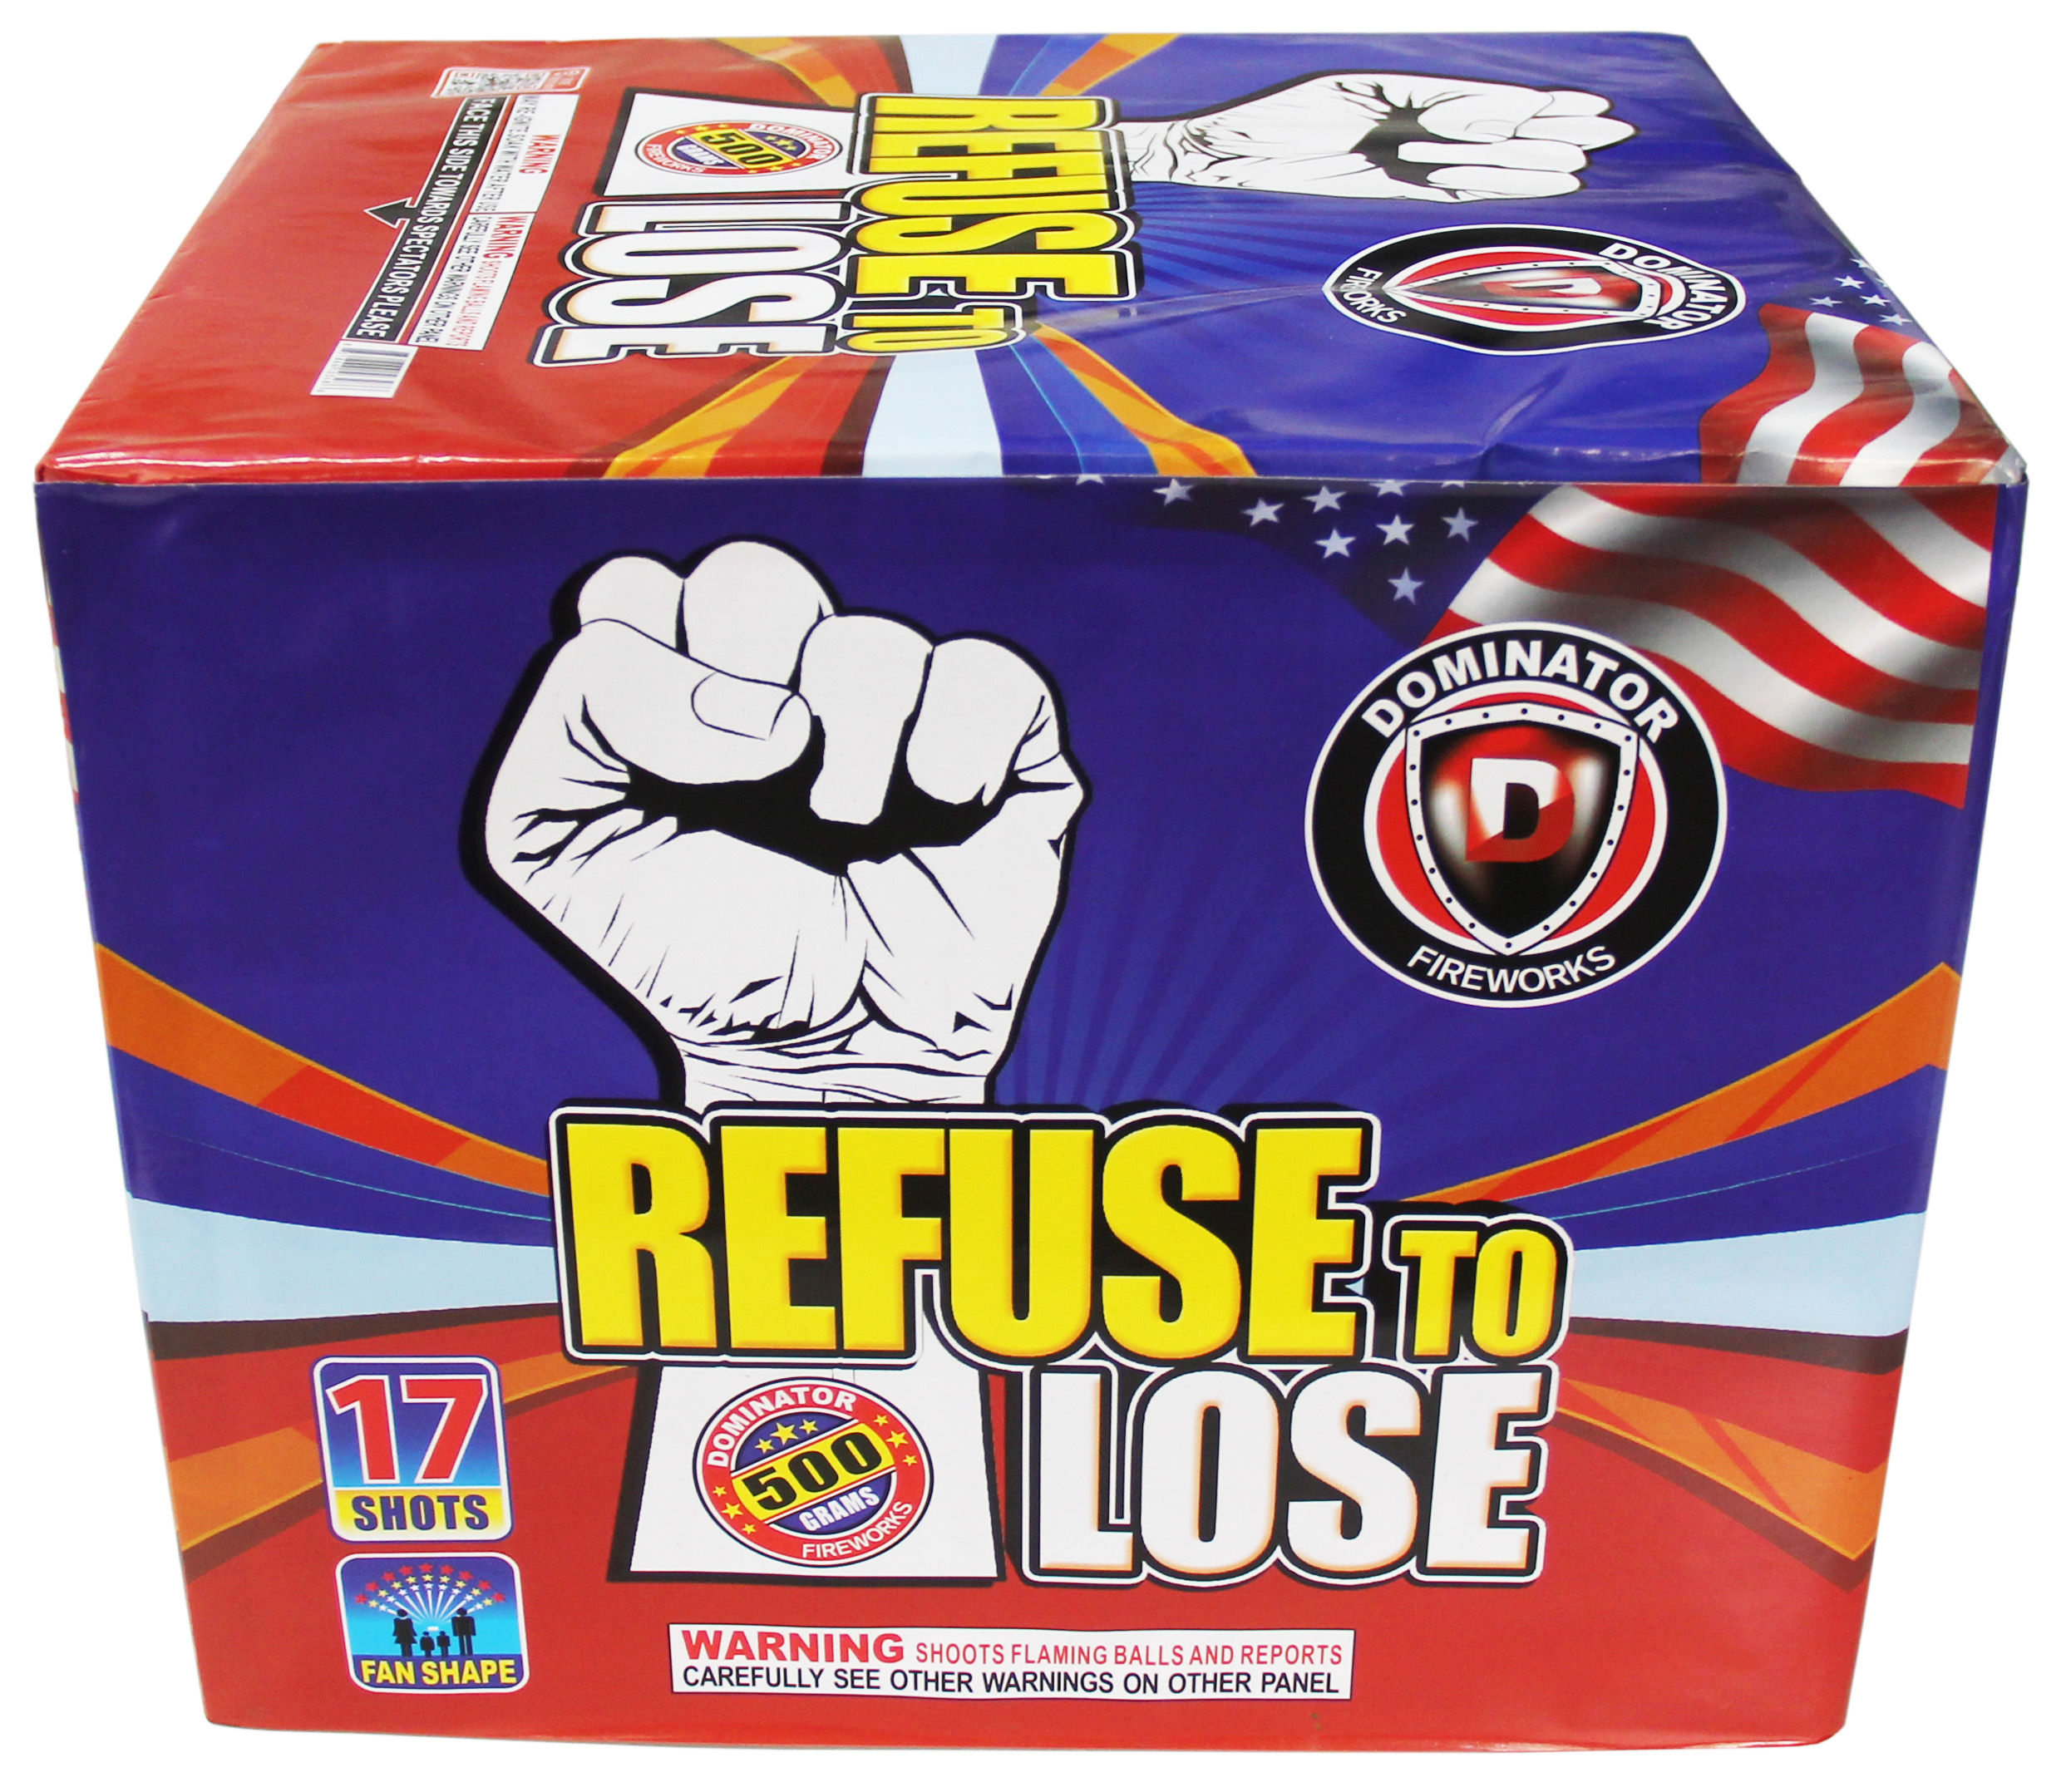 Refuse to Lose